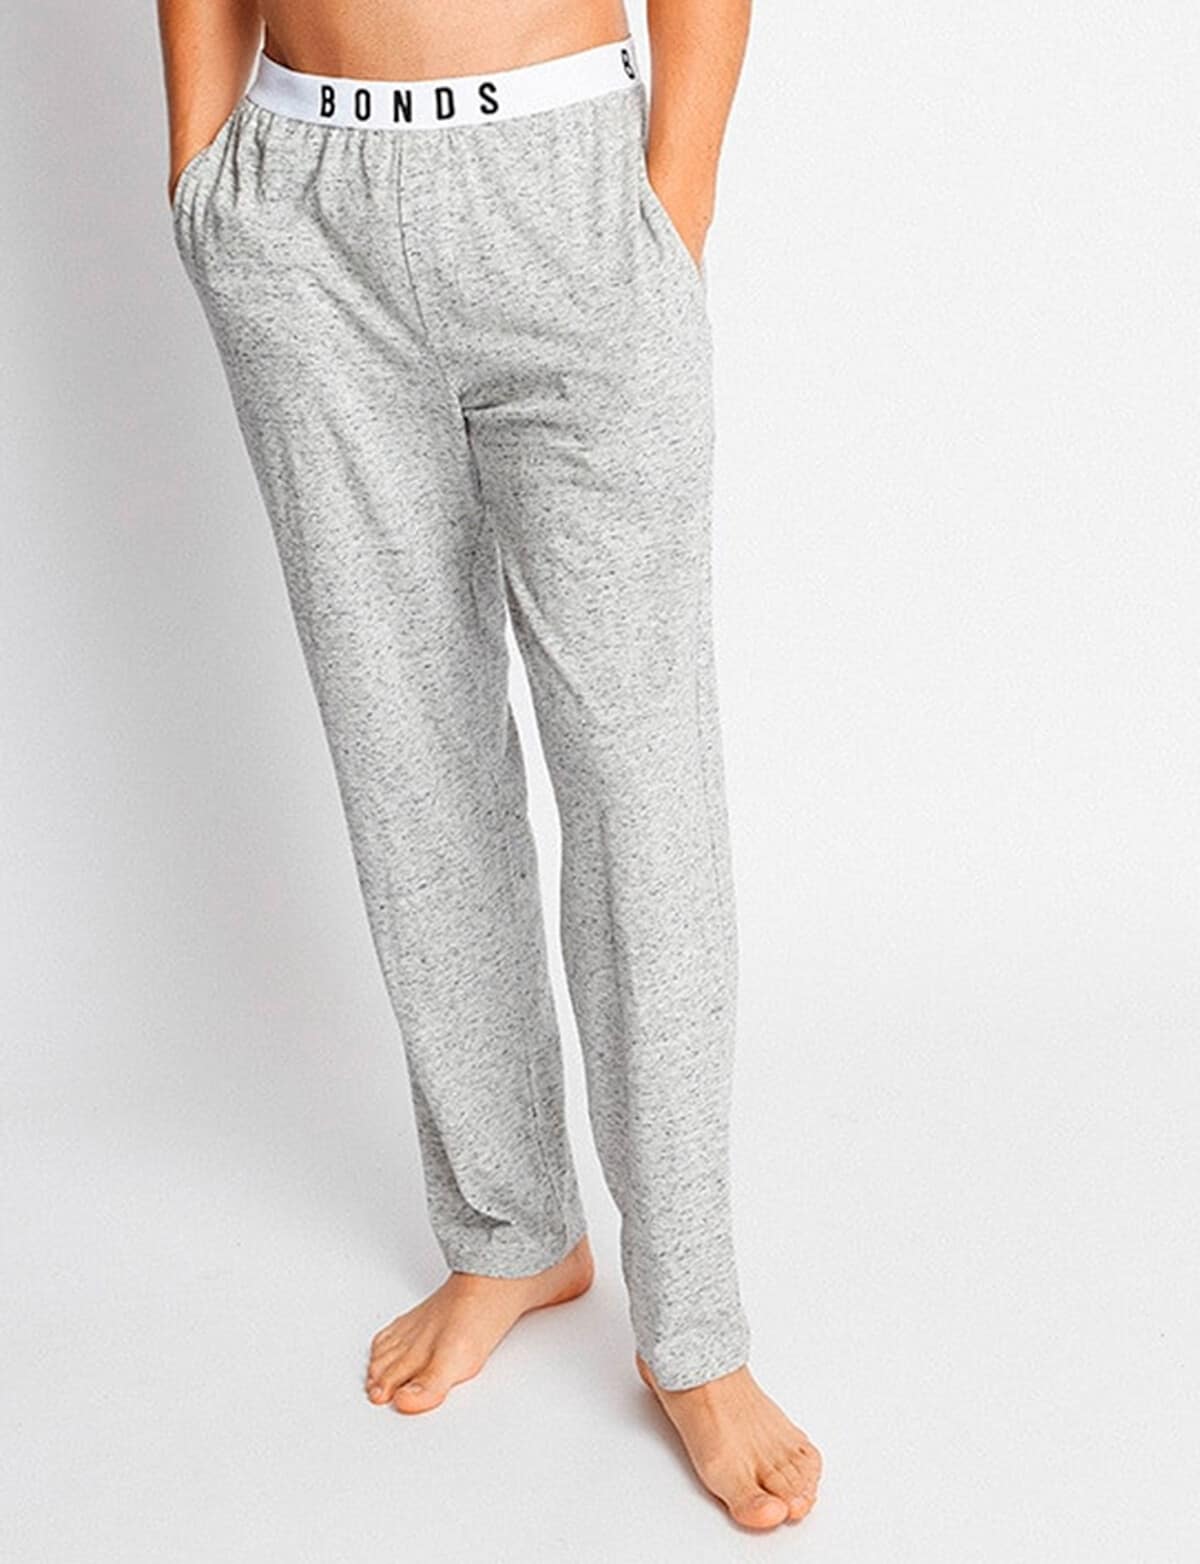 Bonds Plain Sleep Pant, Grey - Sleepwear